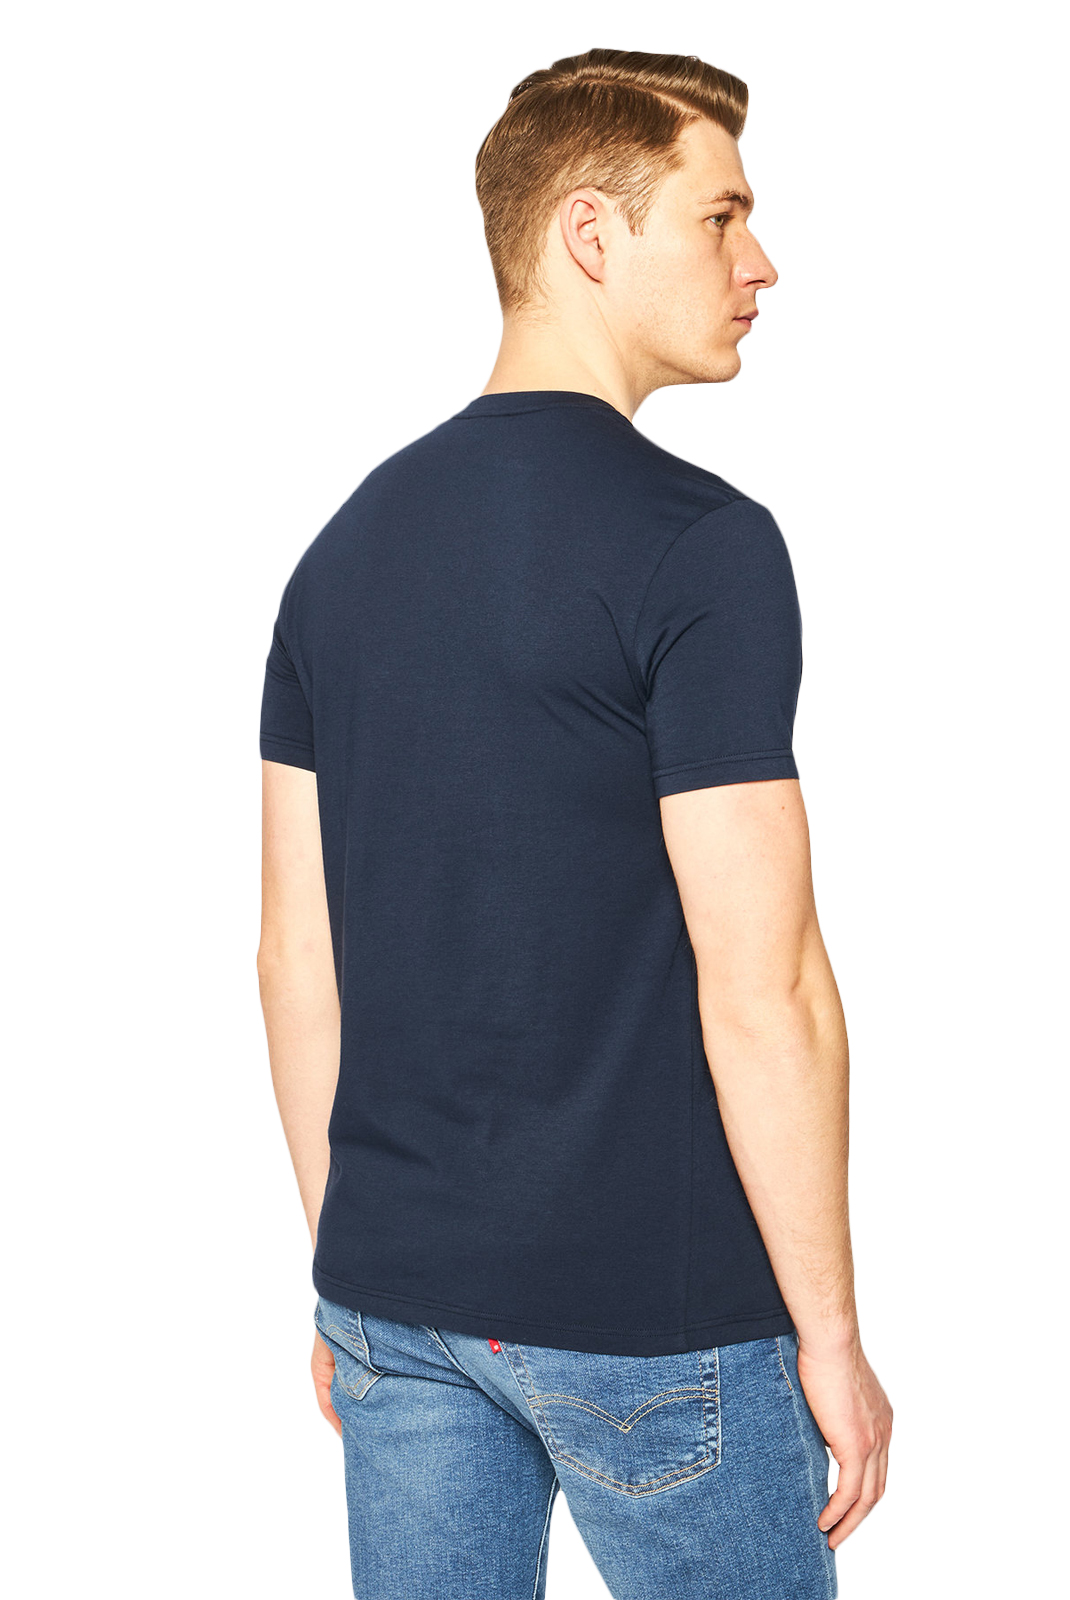 Tee-shirt bleu marine manches courtes Emporio Armani - 110853